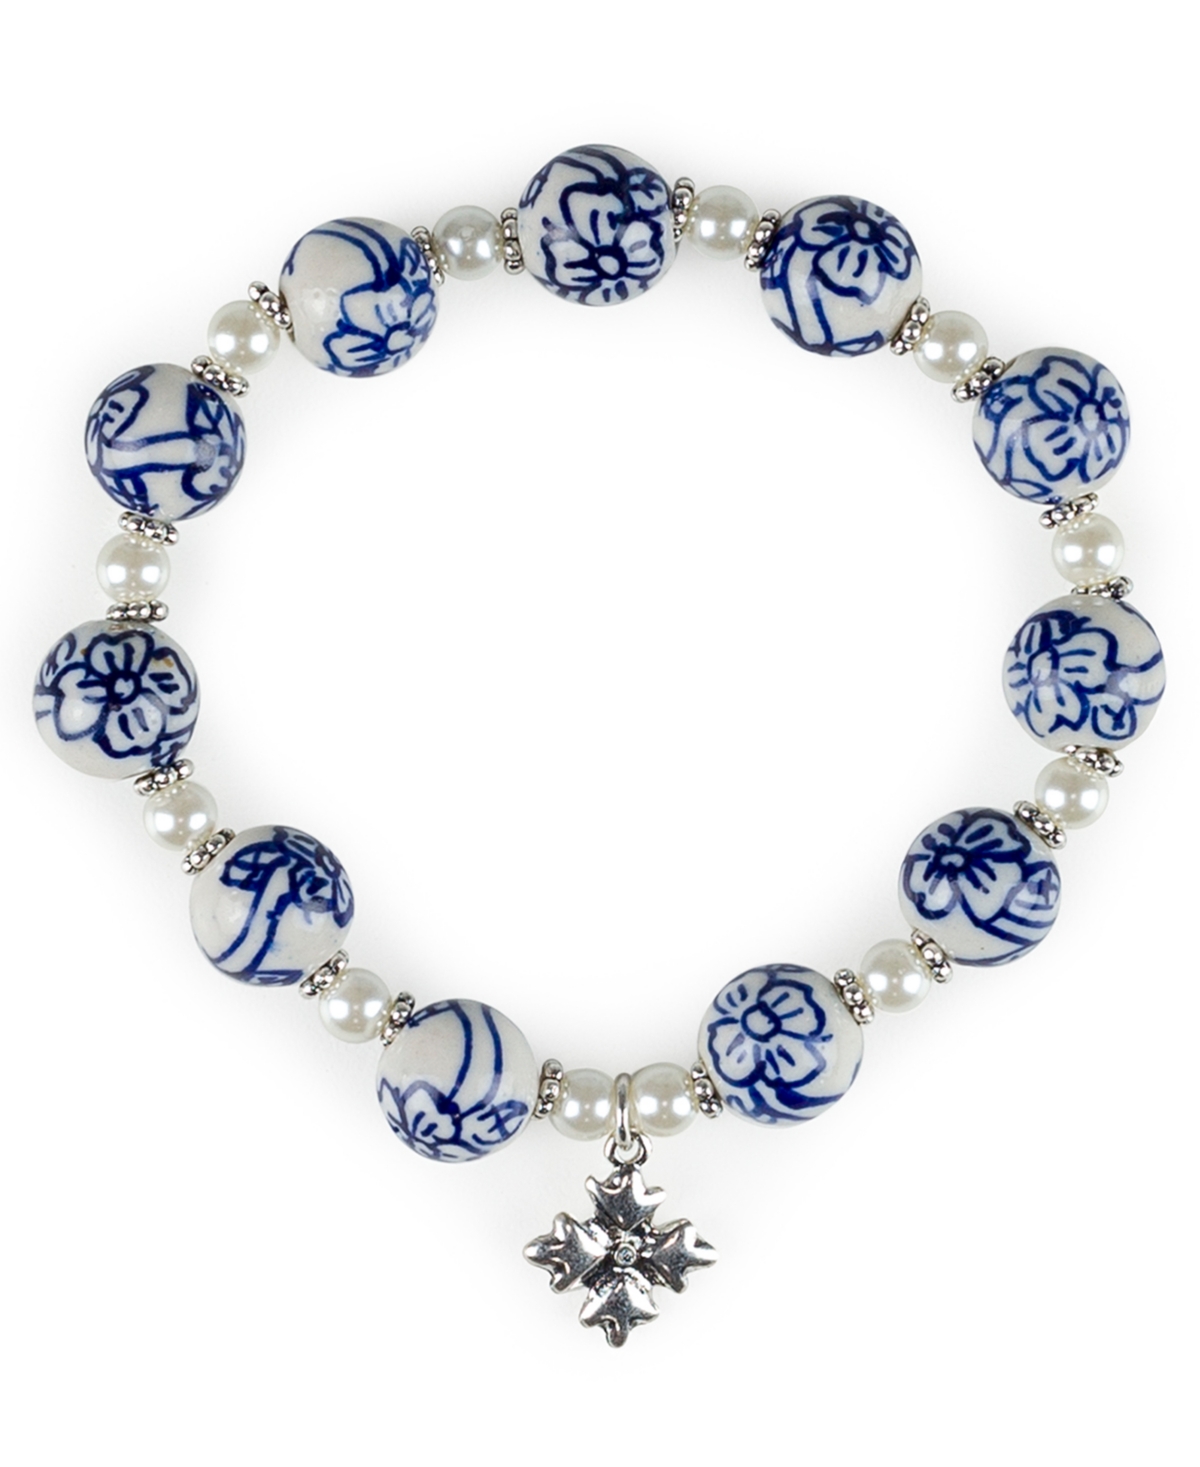 Silver-Tone Imitation Pearl & Floral-Print Bead Stretch Bracelet - Silver Ox, Blue